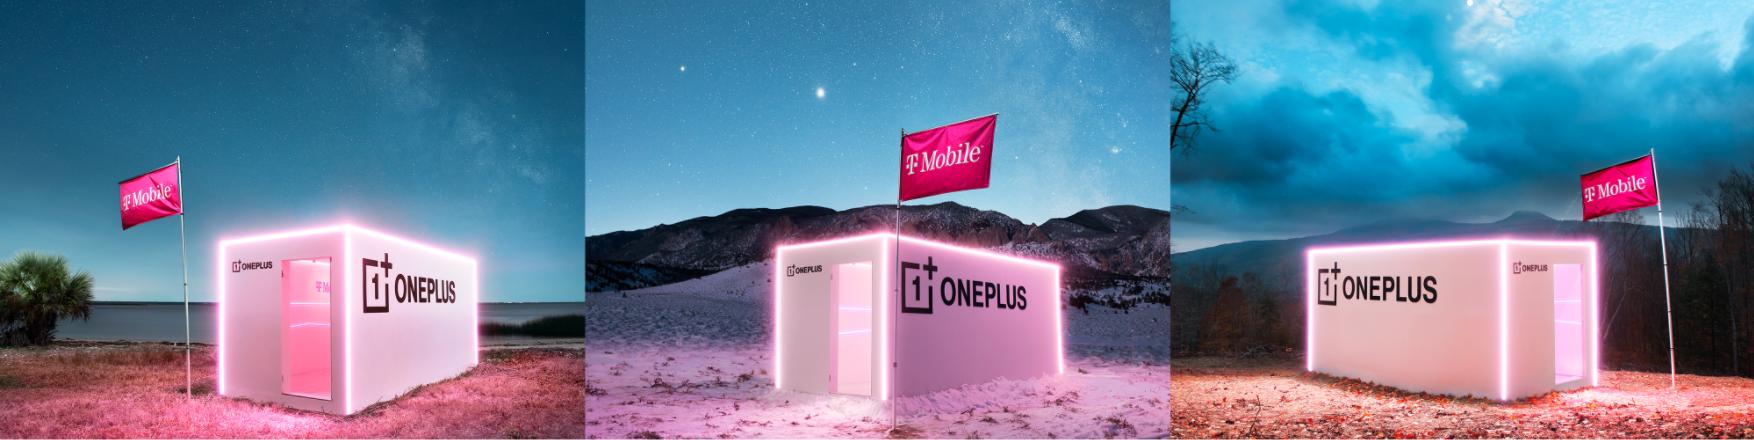 Ejendomsret værtinde Gennemvæd T-Mobile and OnePlus contest offers up to $5,000 - 9to5Google